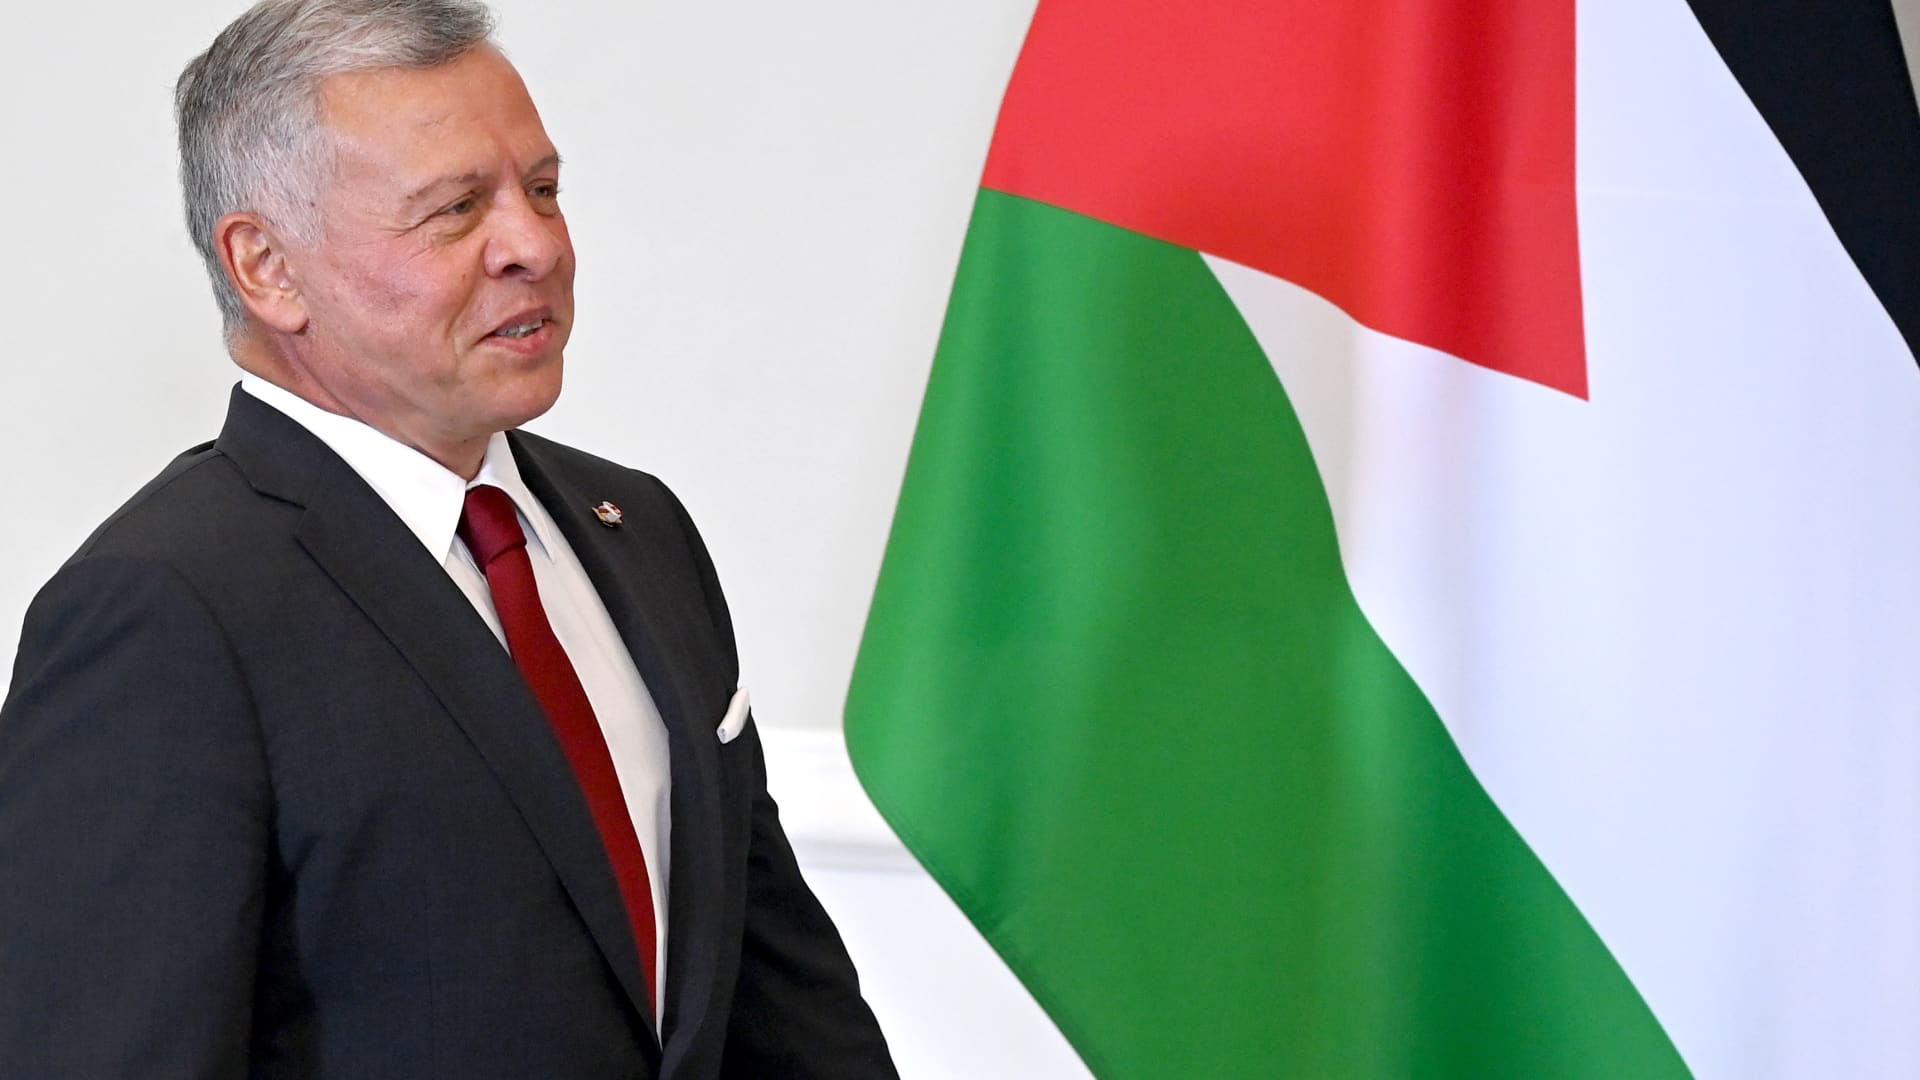 Jordan’s king says he would reinforce a Center East model of NATO